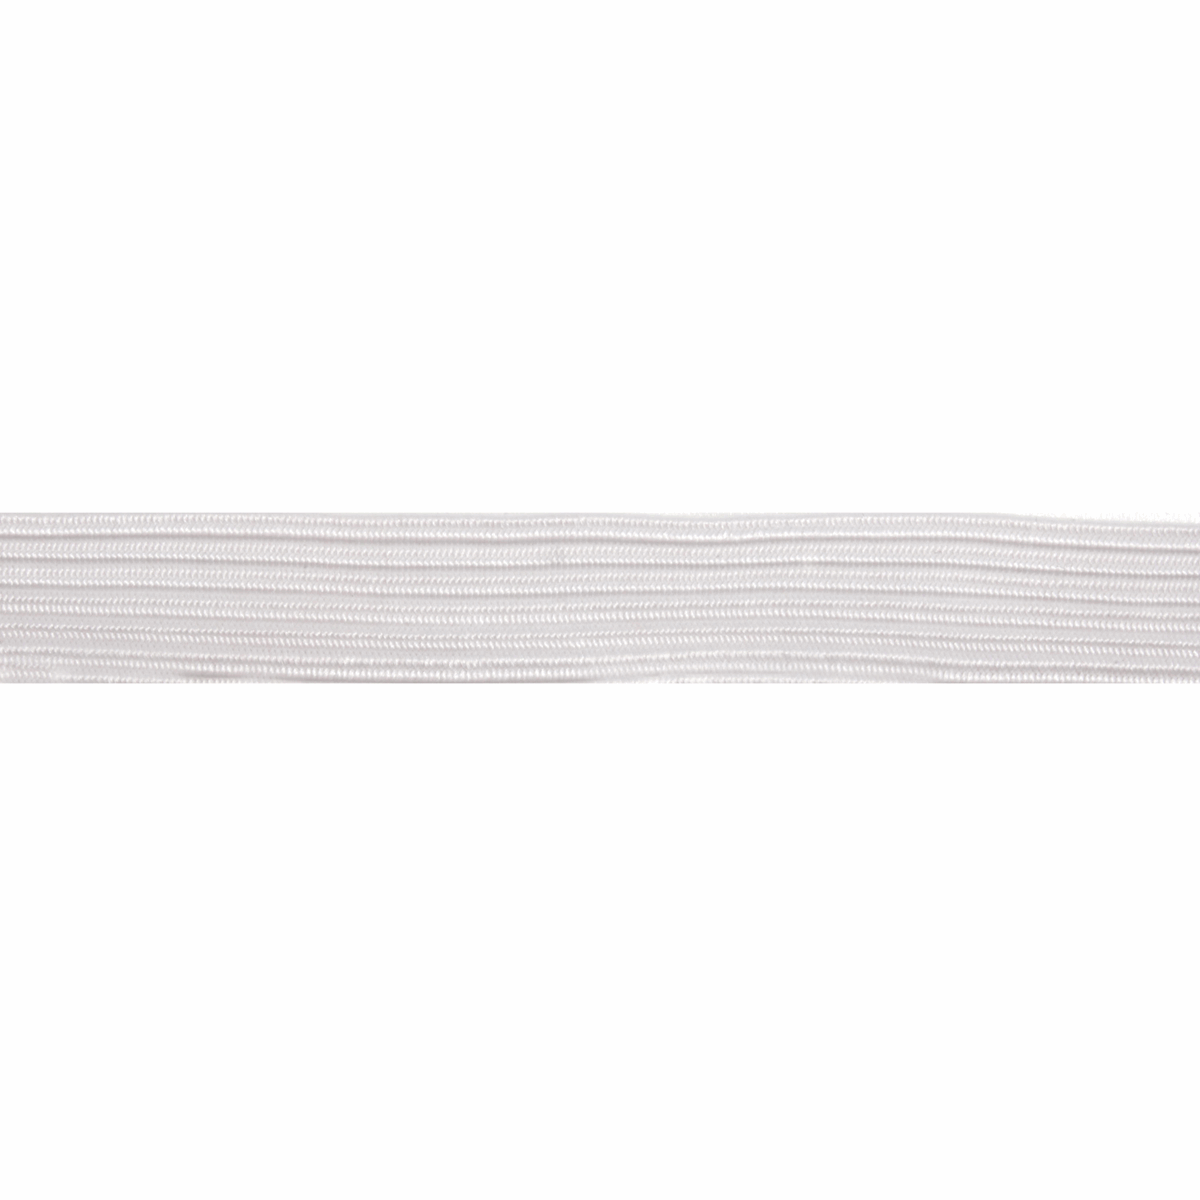 Sewing Gem - Braided Elastic - 13mm Wide - Black or White